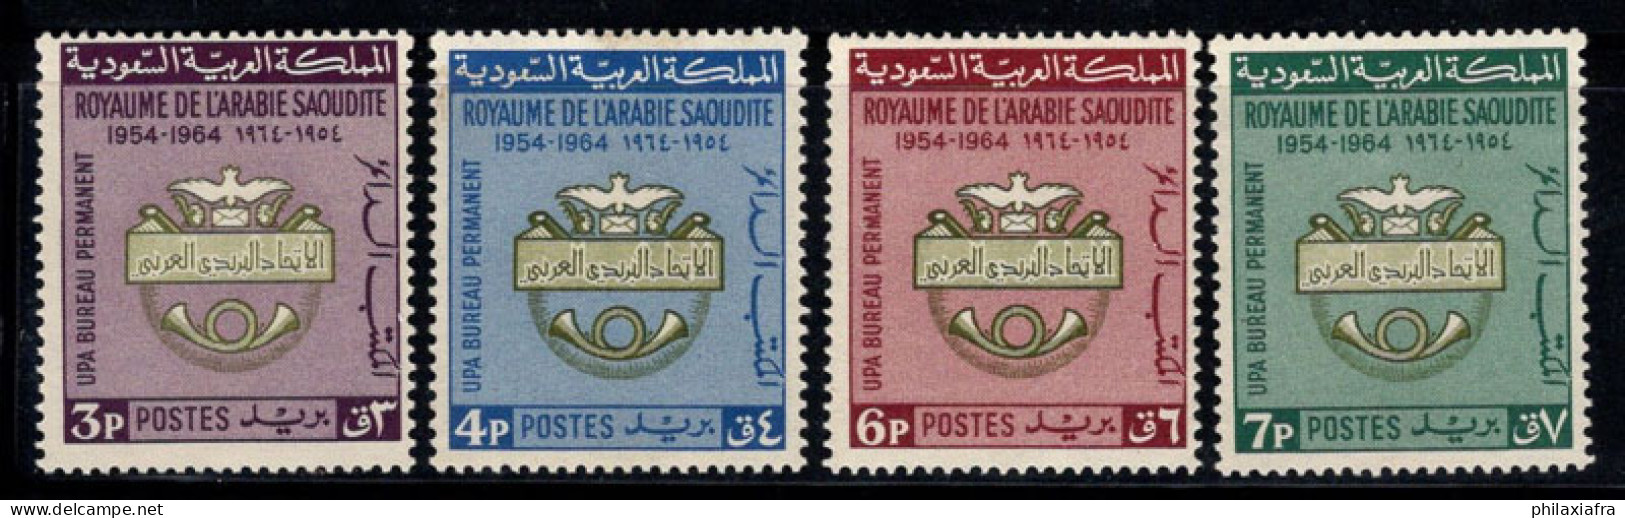 Arabie Saoudite 1966 Mi. 273-76 Neuf ** 60% Insigne De L'Union Postale Arabe - Saudi Arabia